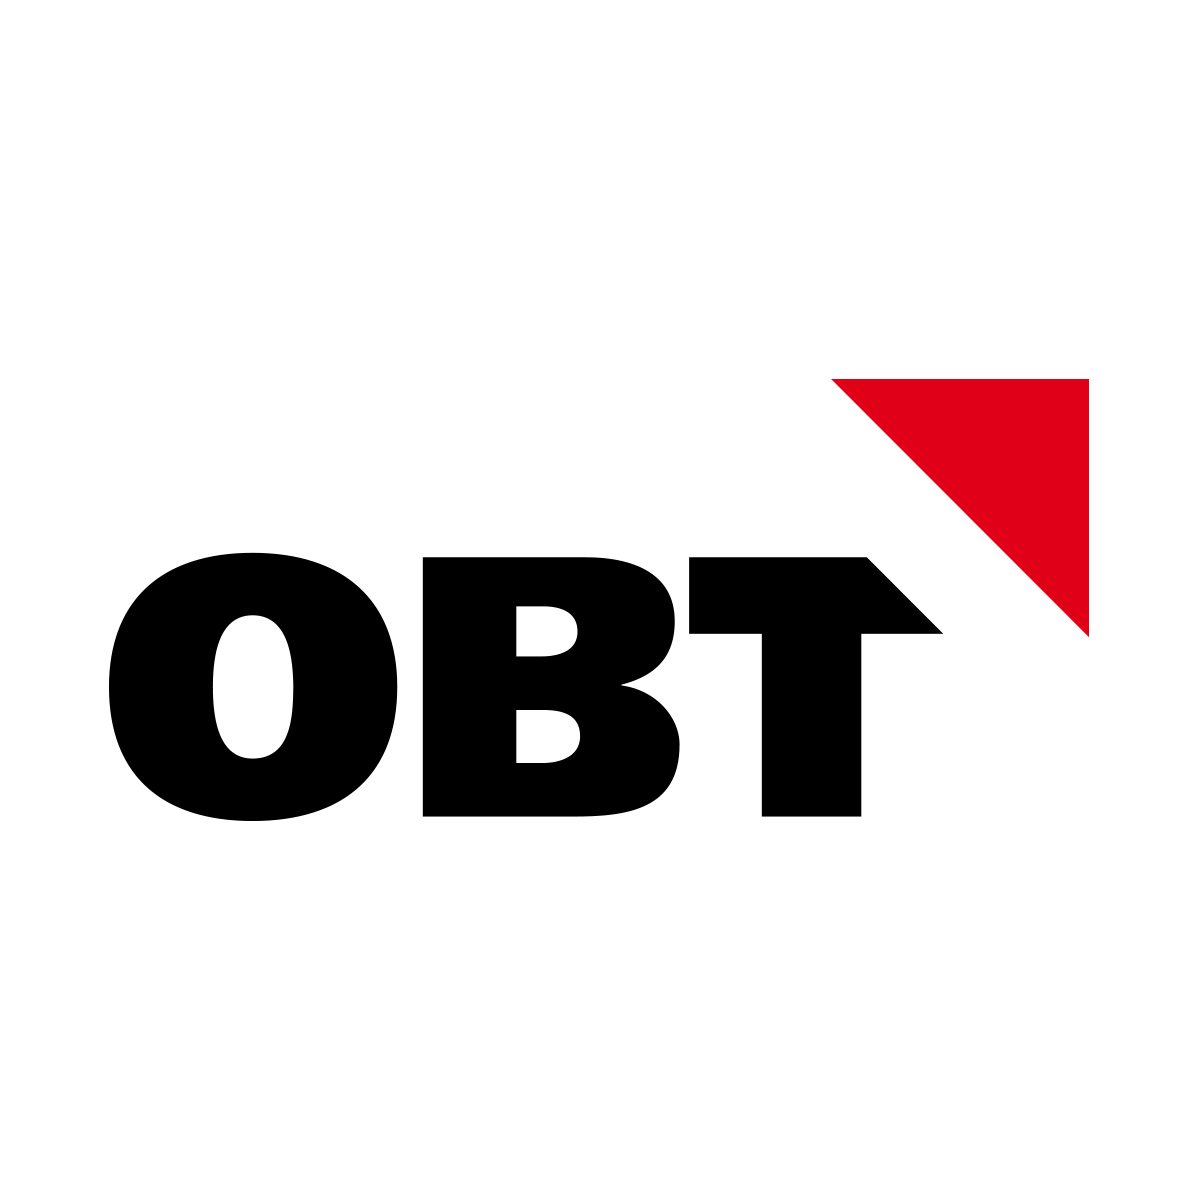 Obt service. Логотип Ch. Ch лого. OBT. Pari c,h лого.